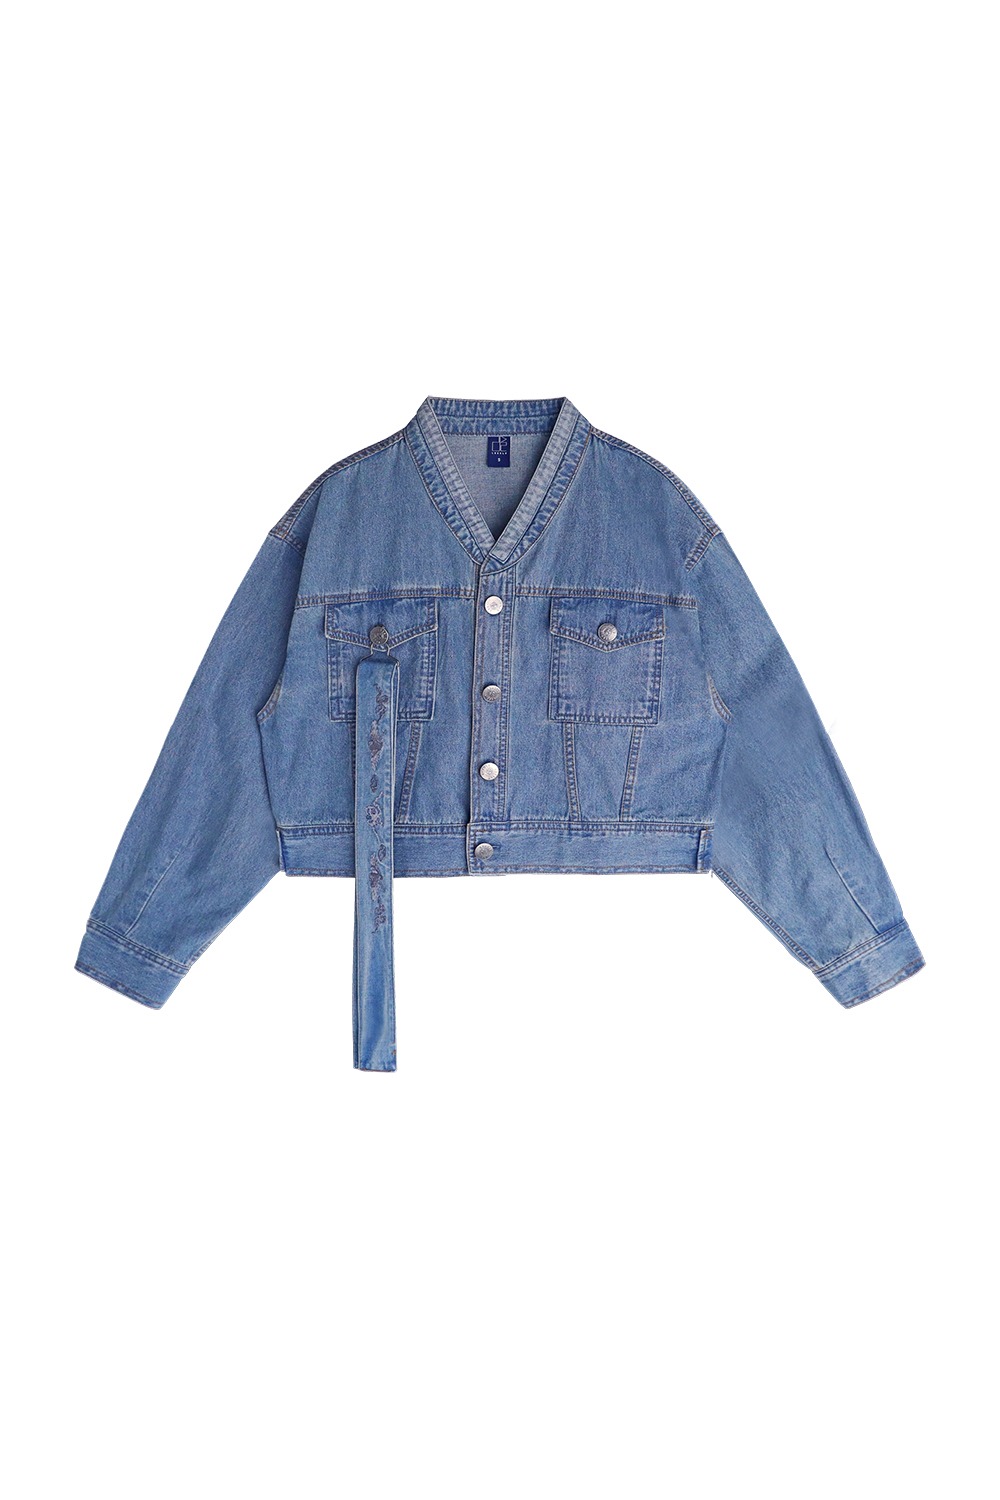 Un Hak Hanbok Jean Jacket [Crop-Blue]  Pre-order